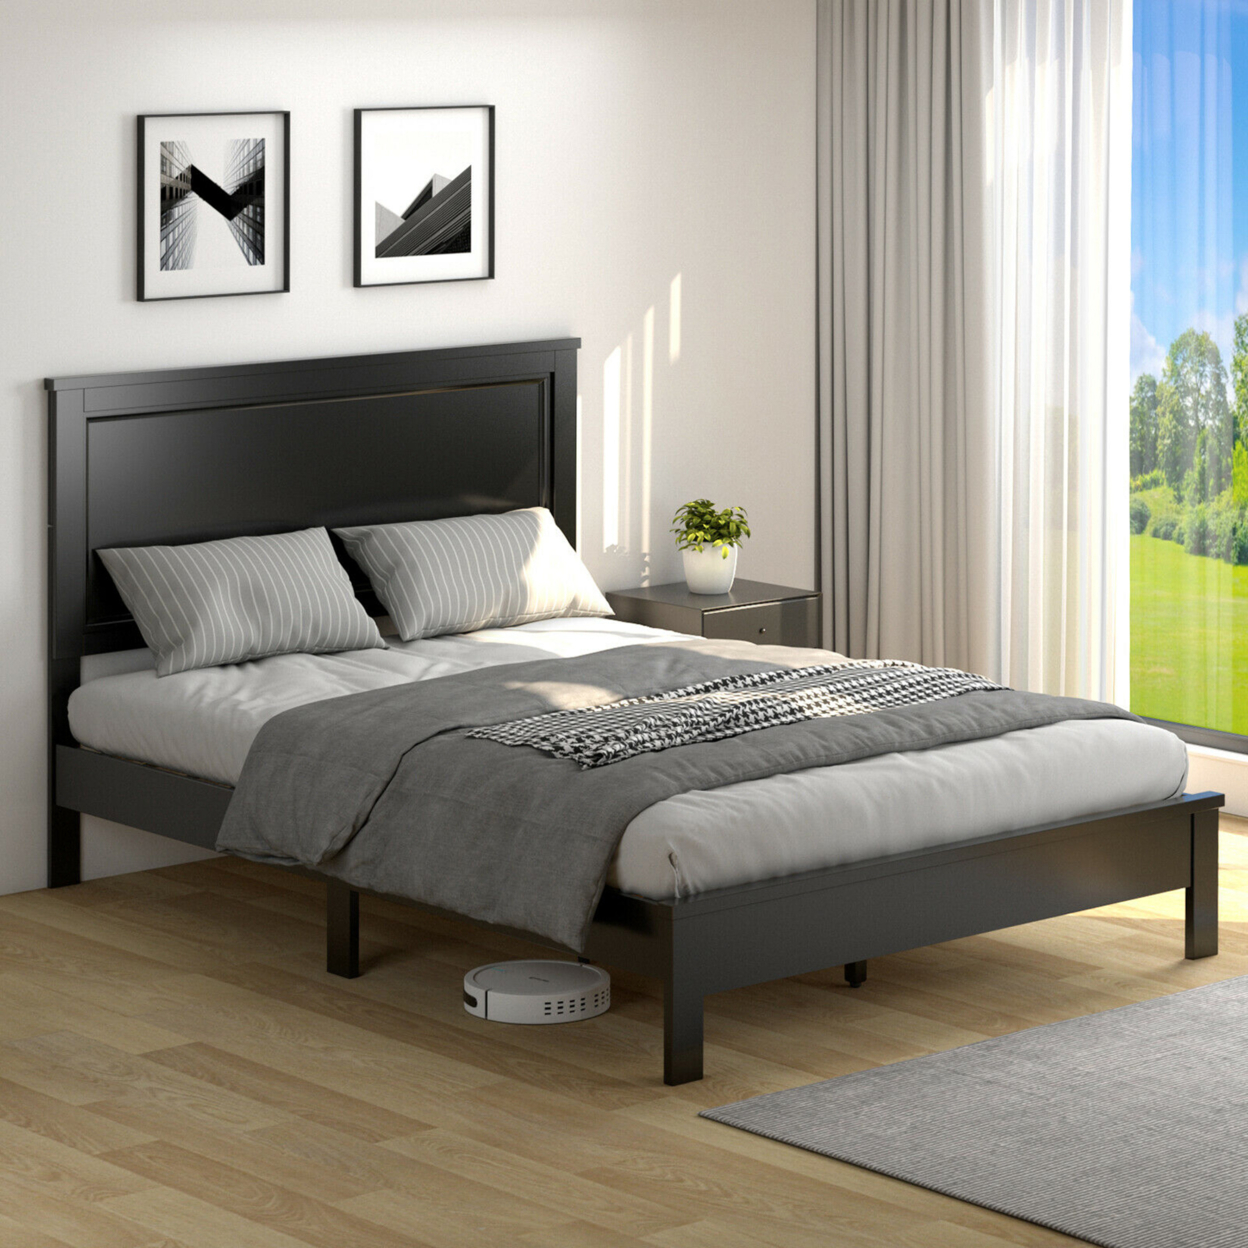 Twin/Full/Queen Size Bed Frame Platform Slat High Headboard Bedroom Rubber Wood Leg - Black, Queen